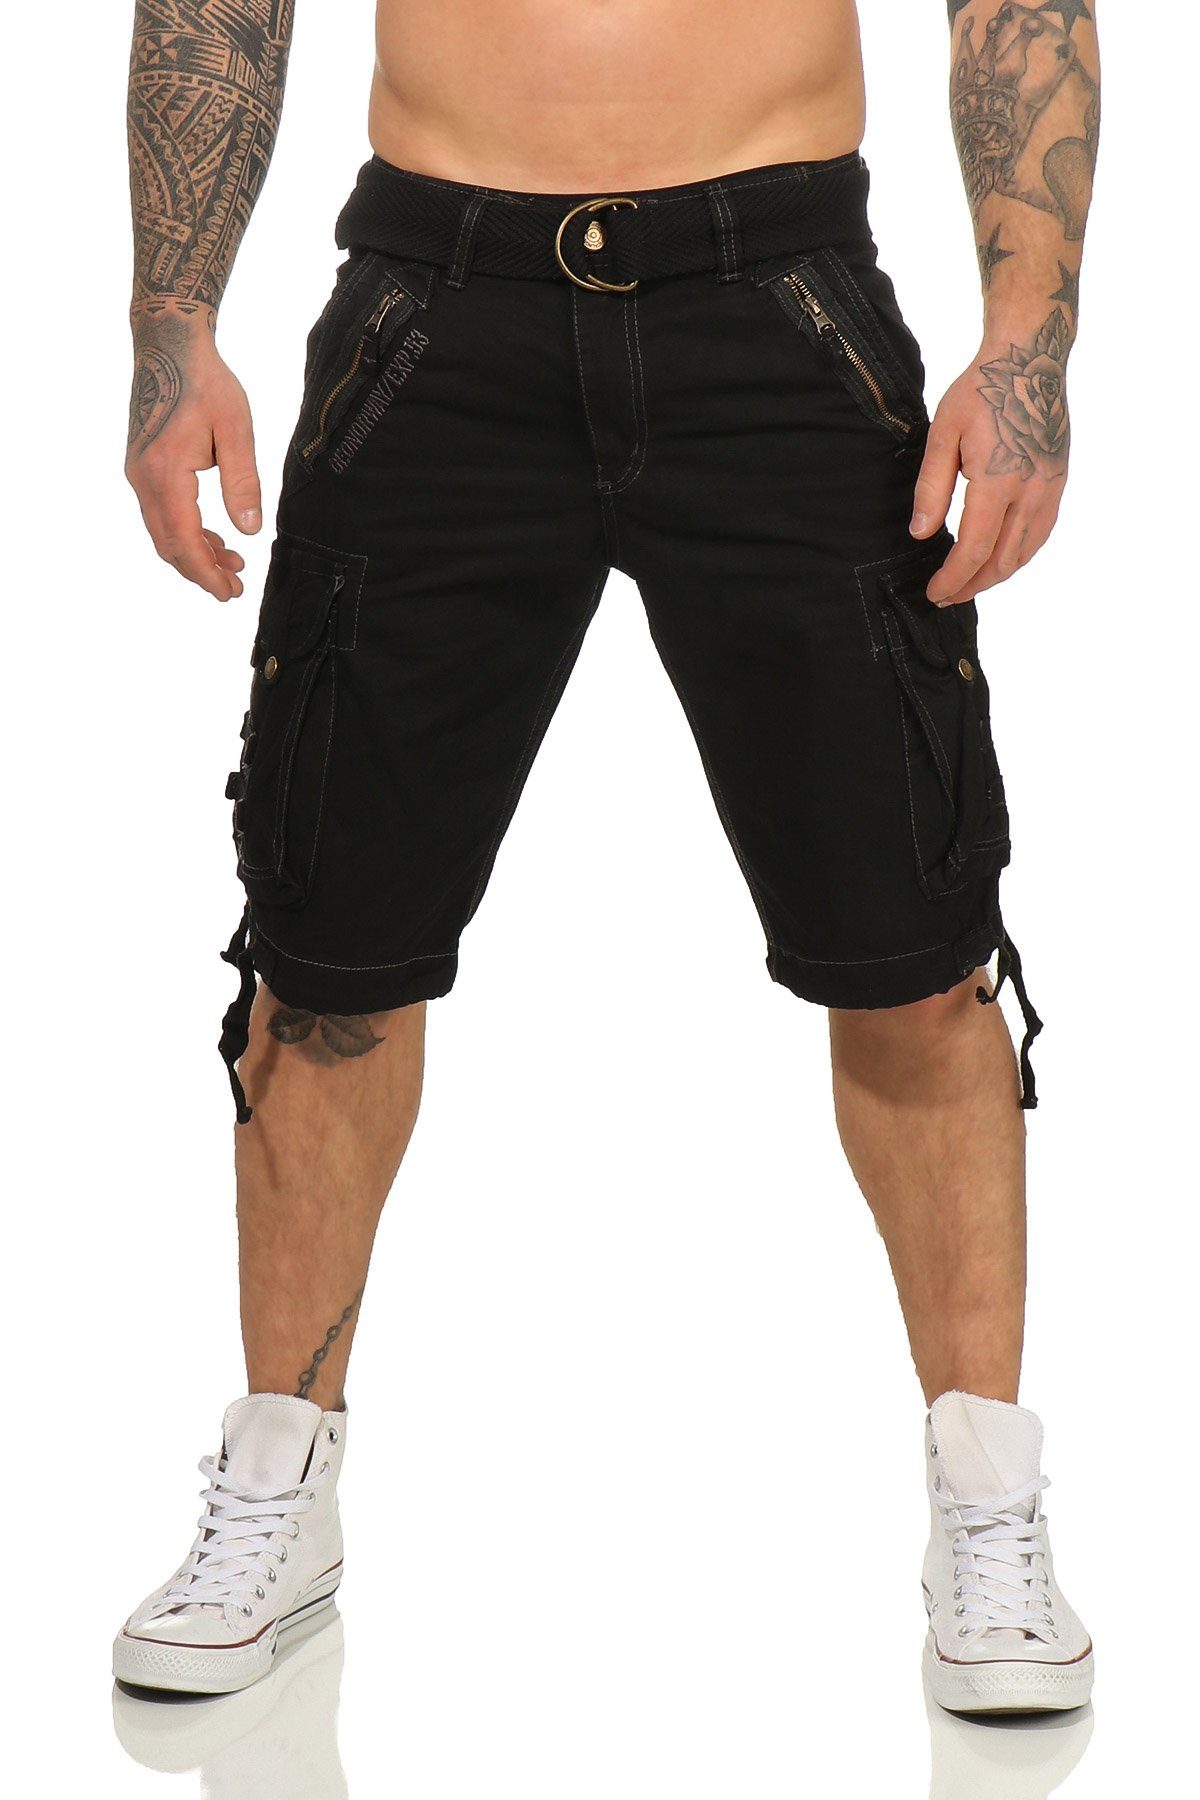 Shorts Norway (mit Geographical G-PAPARAZZI Hose, Gürtel) kurze unifarben abnehmbarem Shorts, Cargoshorts Schwarz Herren